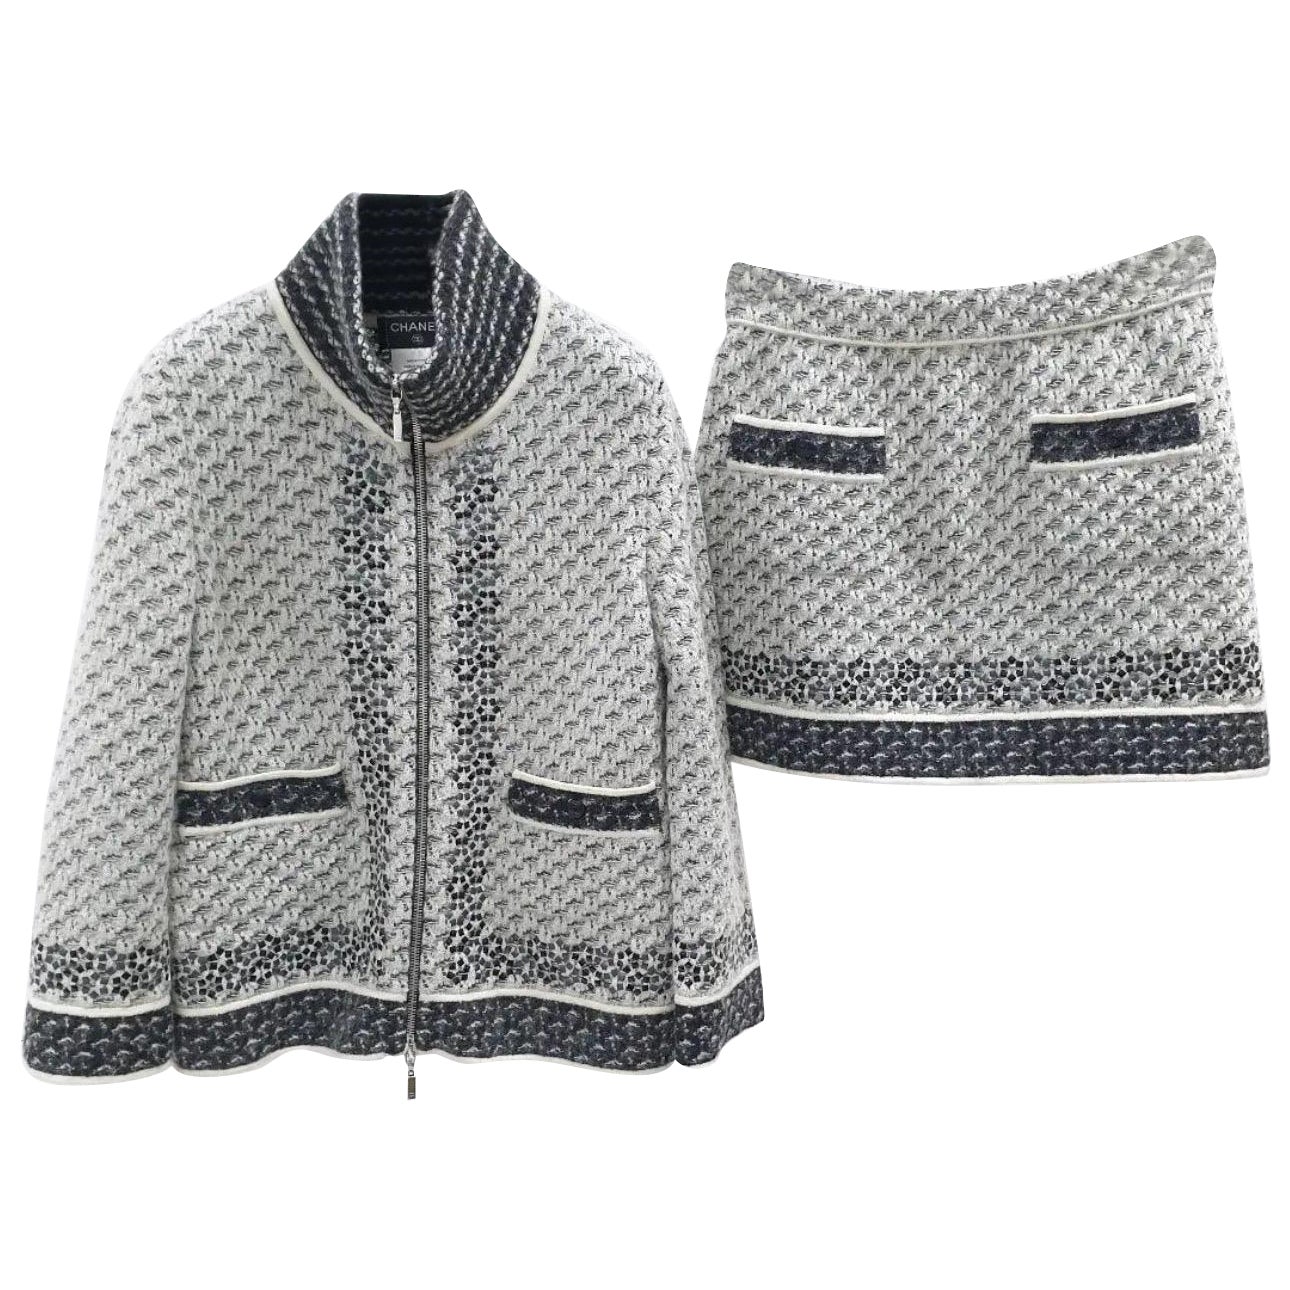 Chanel Light Grey Cashmere Jacket and Mini Skirt Set